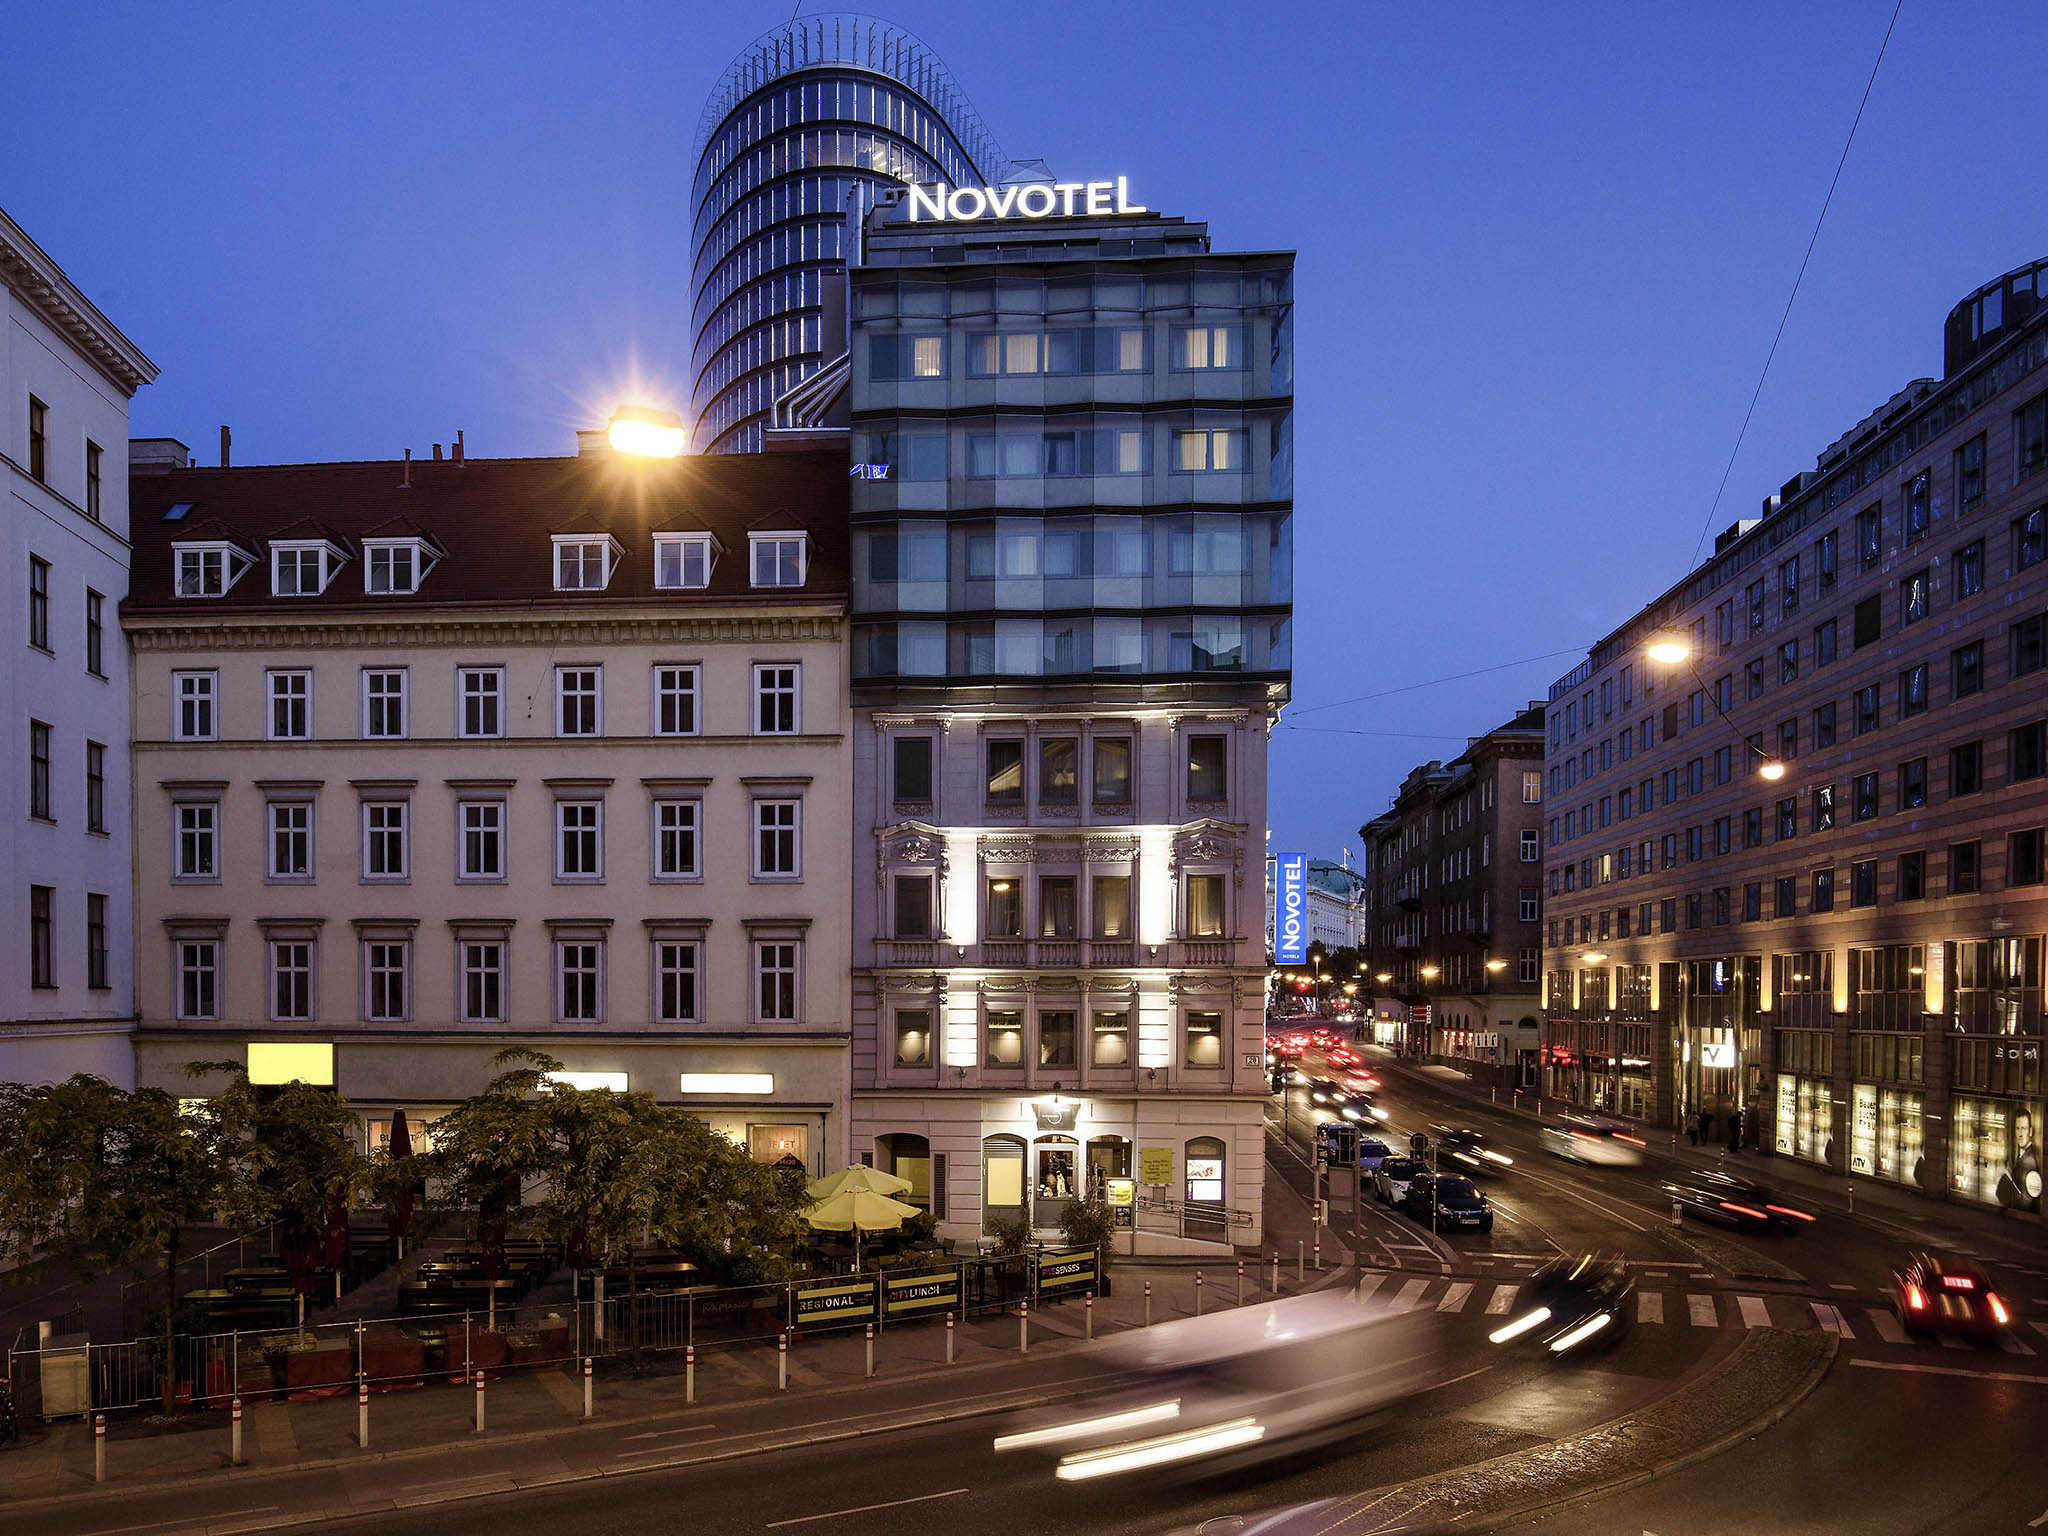 Novotel Wien City**** - Hotel Vienna 1020 | ACCOR